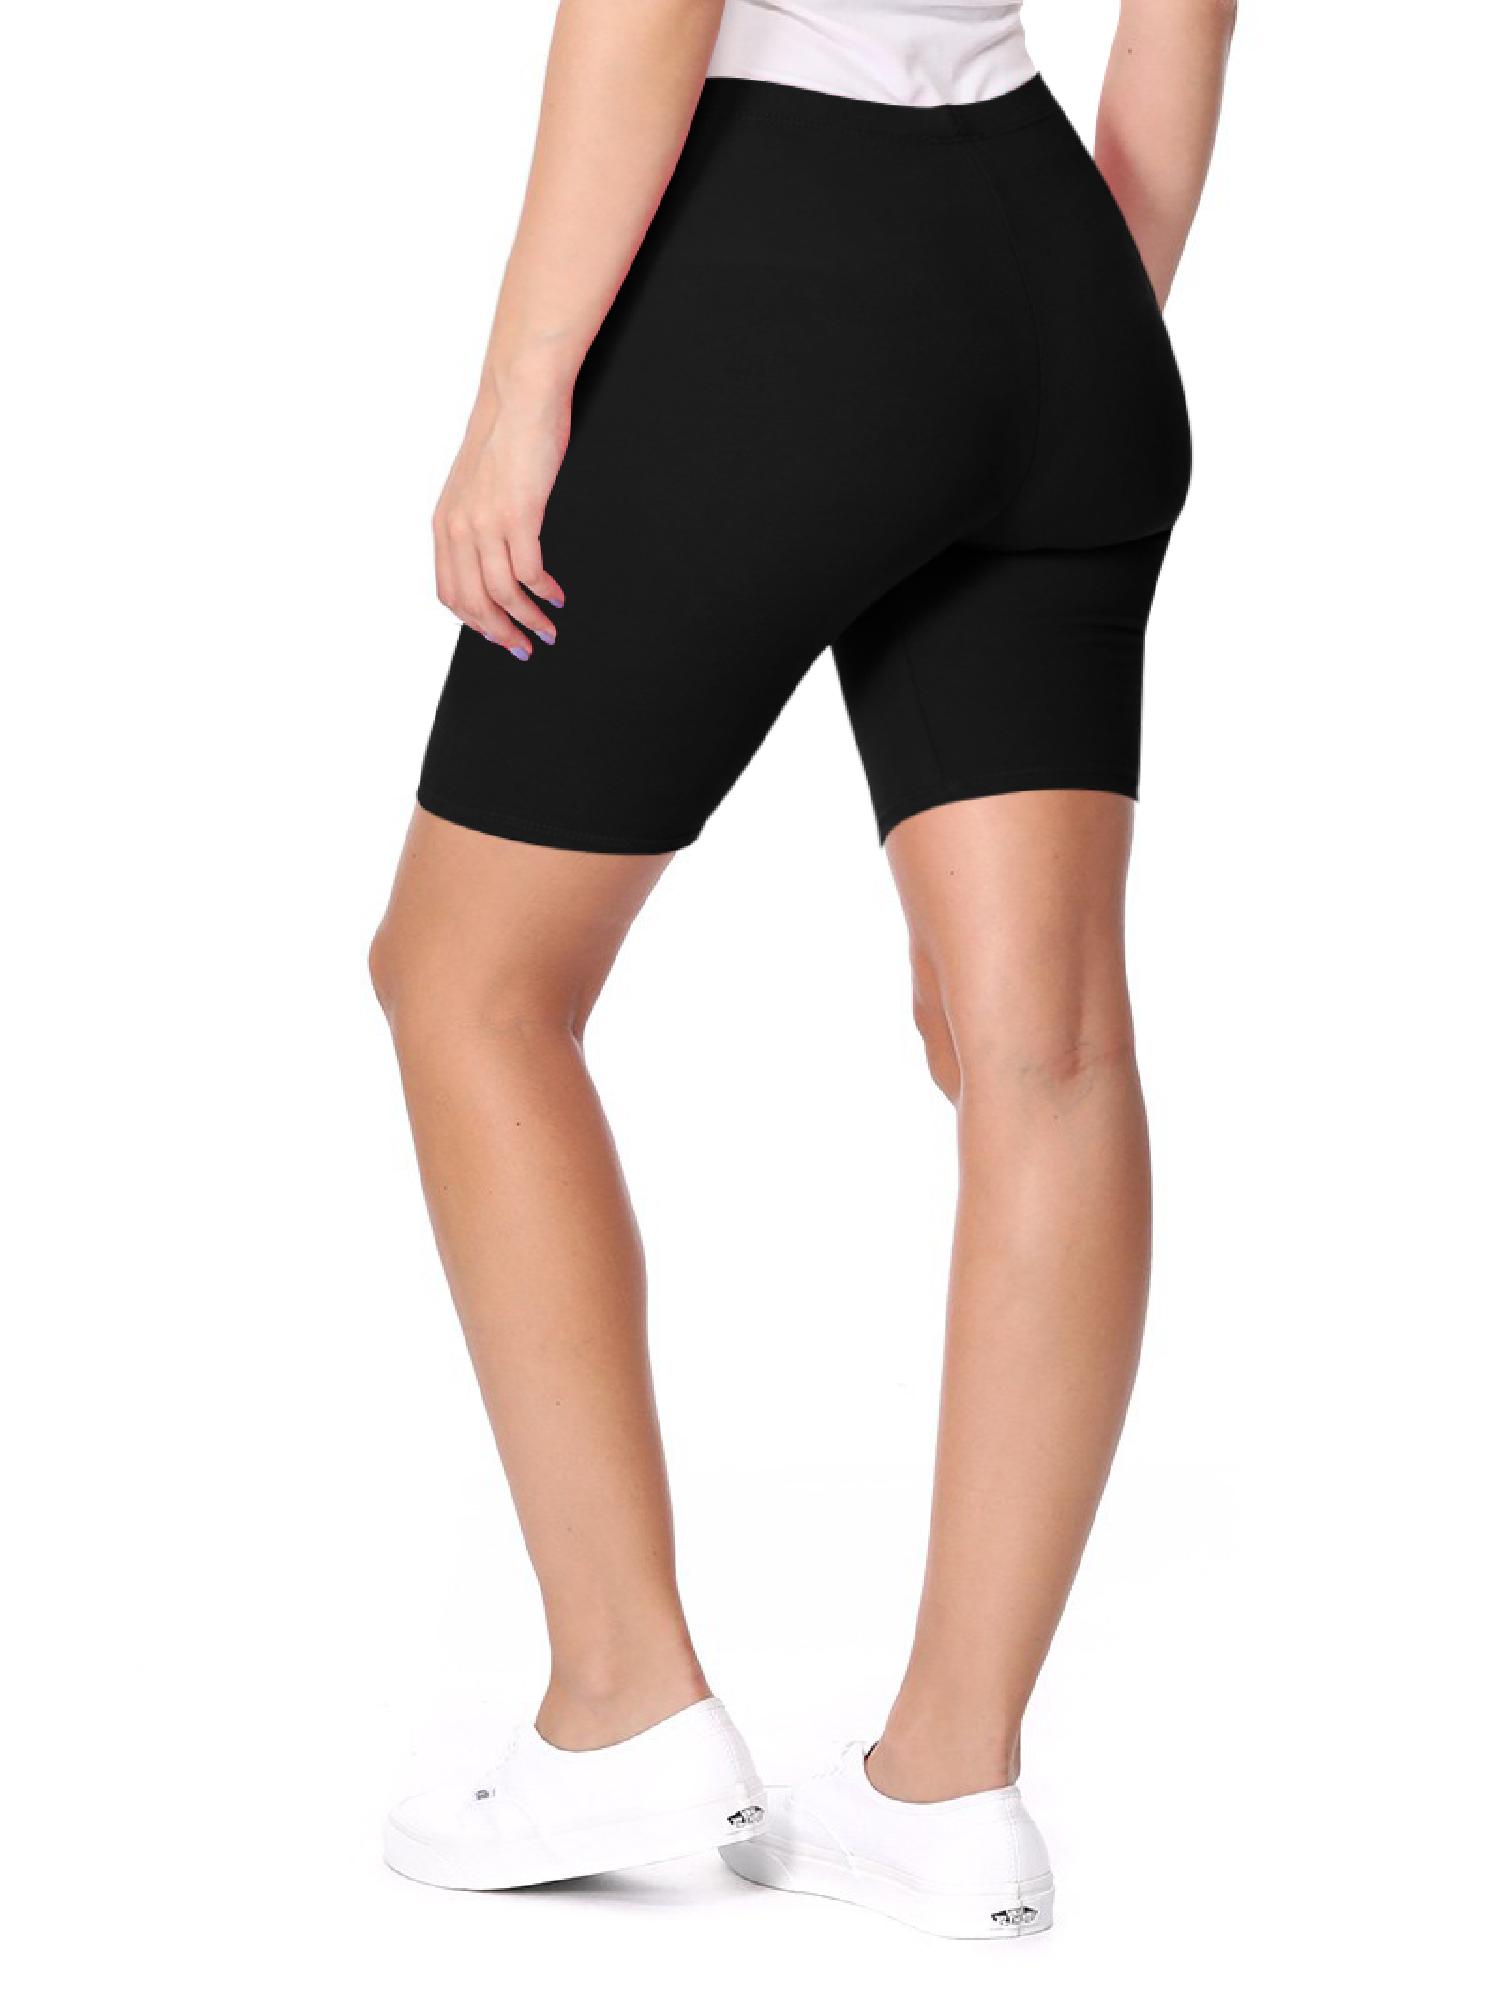 Women's Workout High Waist Comfy Elastic Band Solid Active Yoga Biker Shorts Pants S-3XL - image 3 of 5